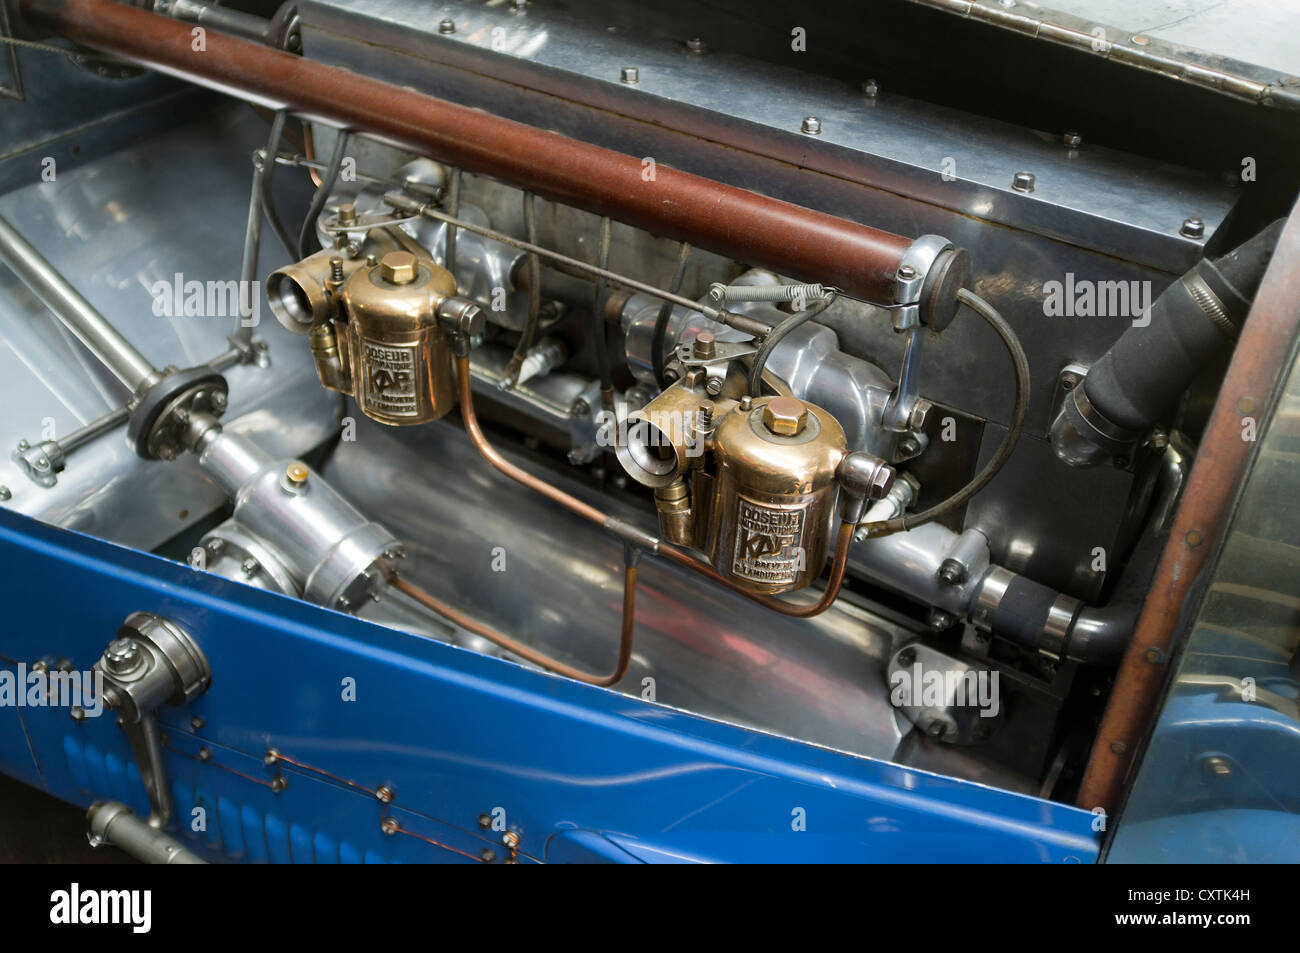 dh National Motor Museum BEAULIEU HAMPSHIRE French classic car Bugatti Type 35 vintage engine close up motorcar Stock Photo